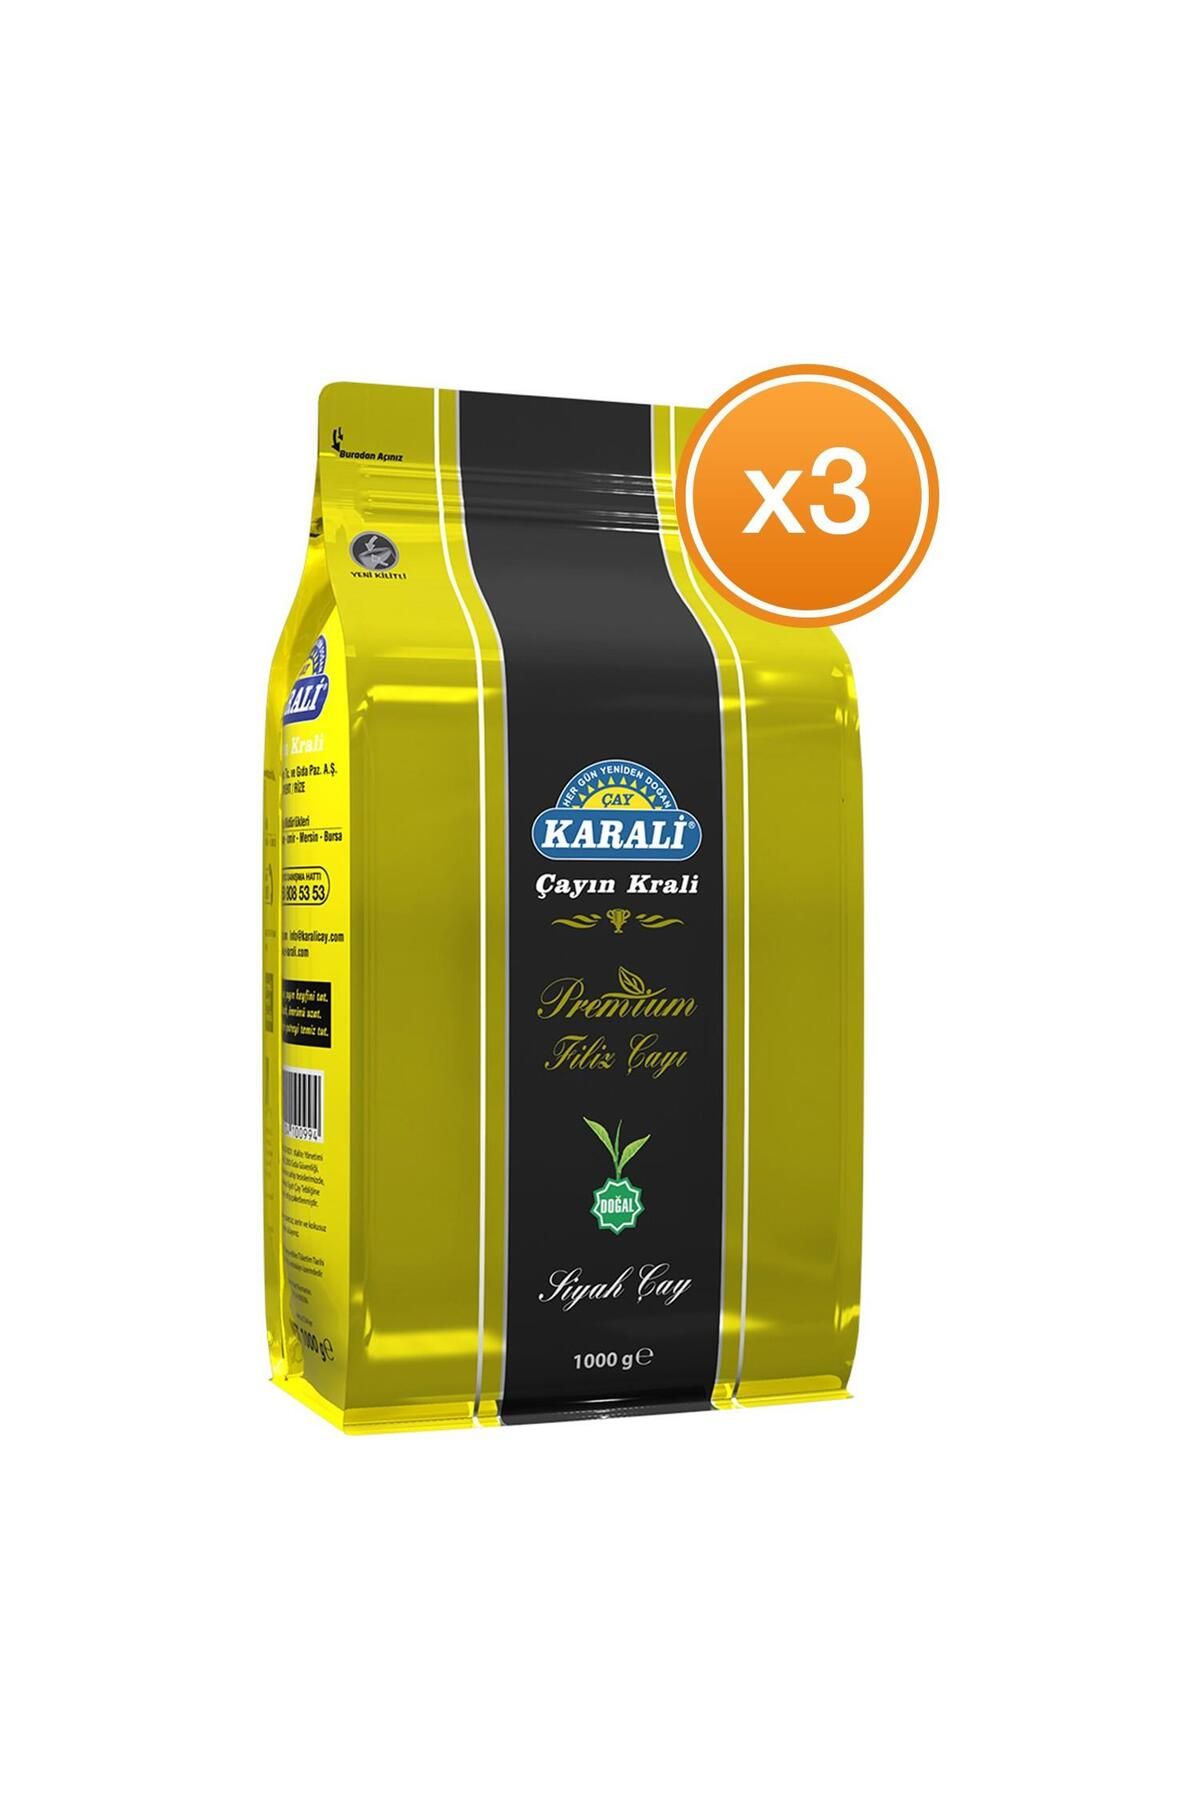 Karali Çay Karali Premium Filiz Çay 1000 gr X 3 Paket 1 Adet Karali Kupa Hediye